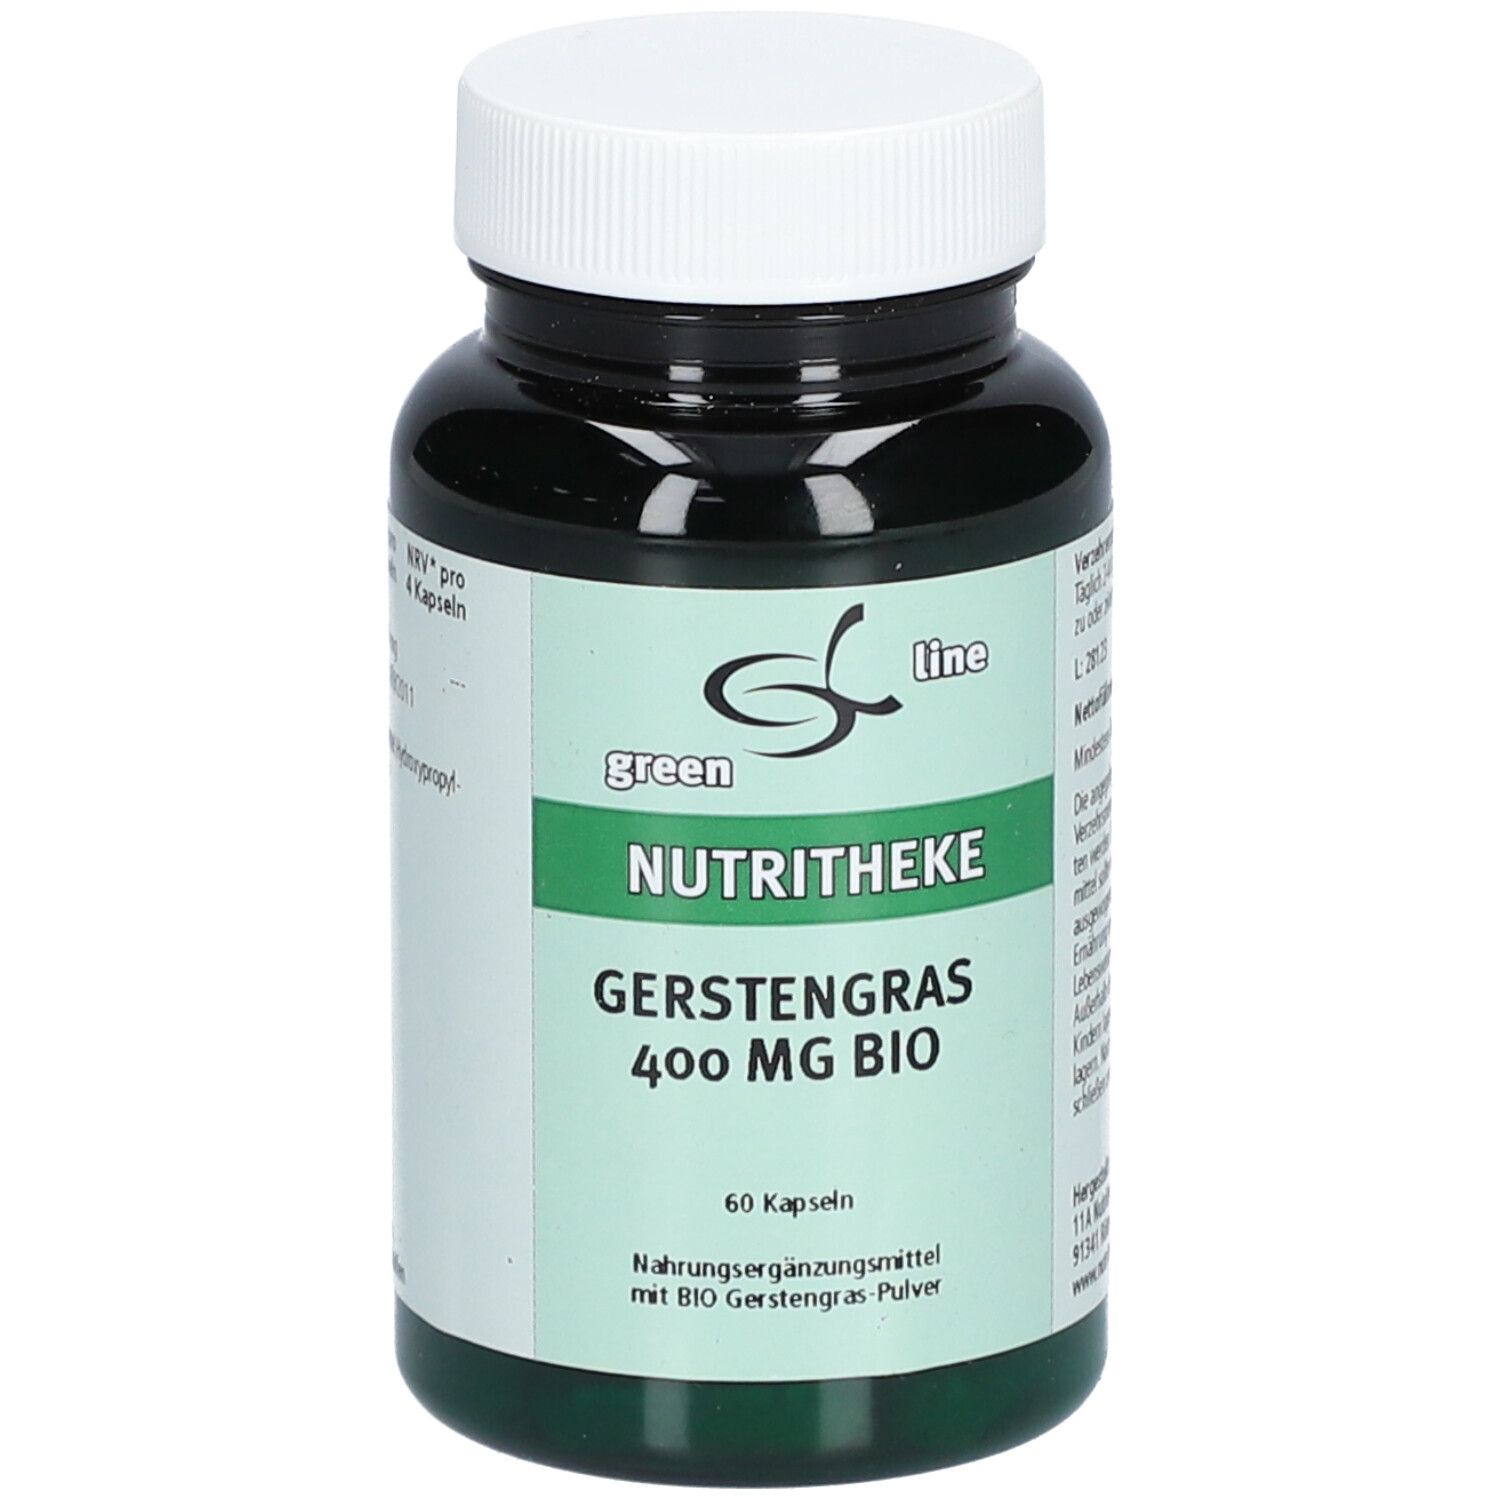 green line GERSTENGRAS 400 mg BIO